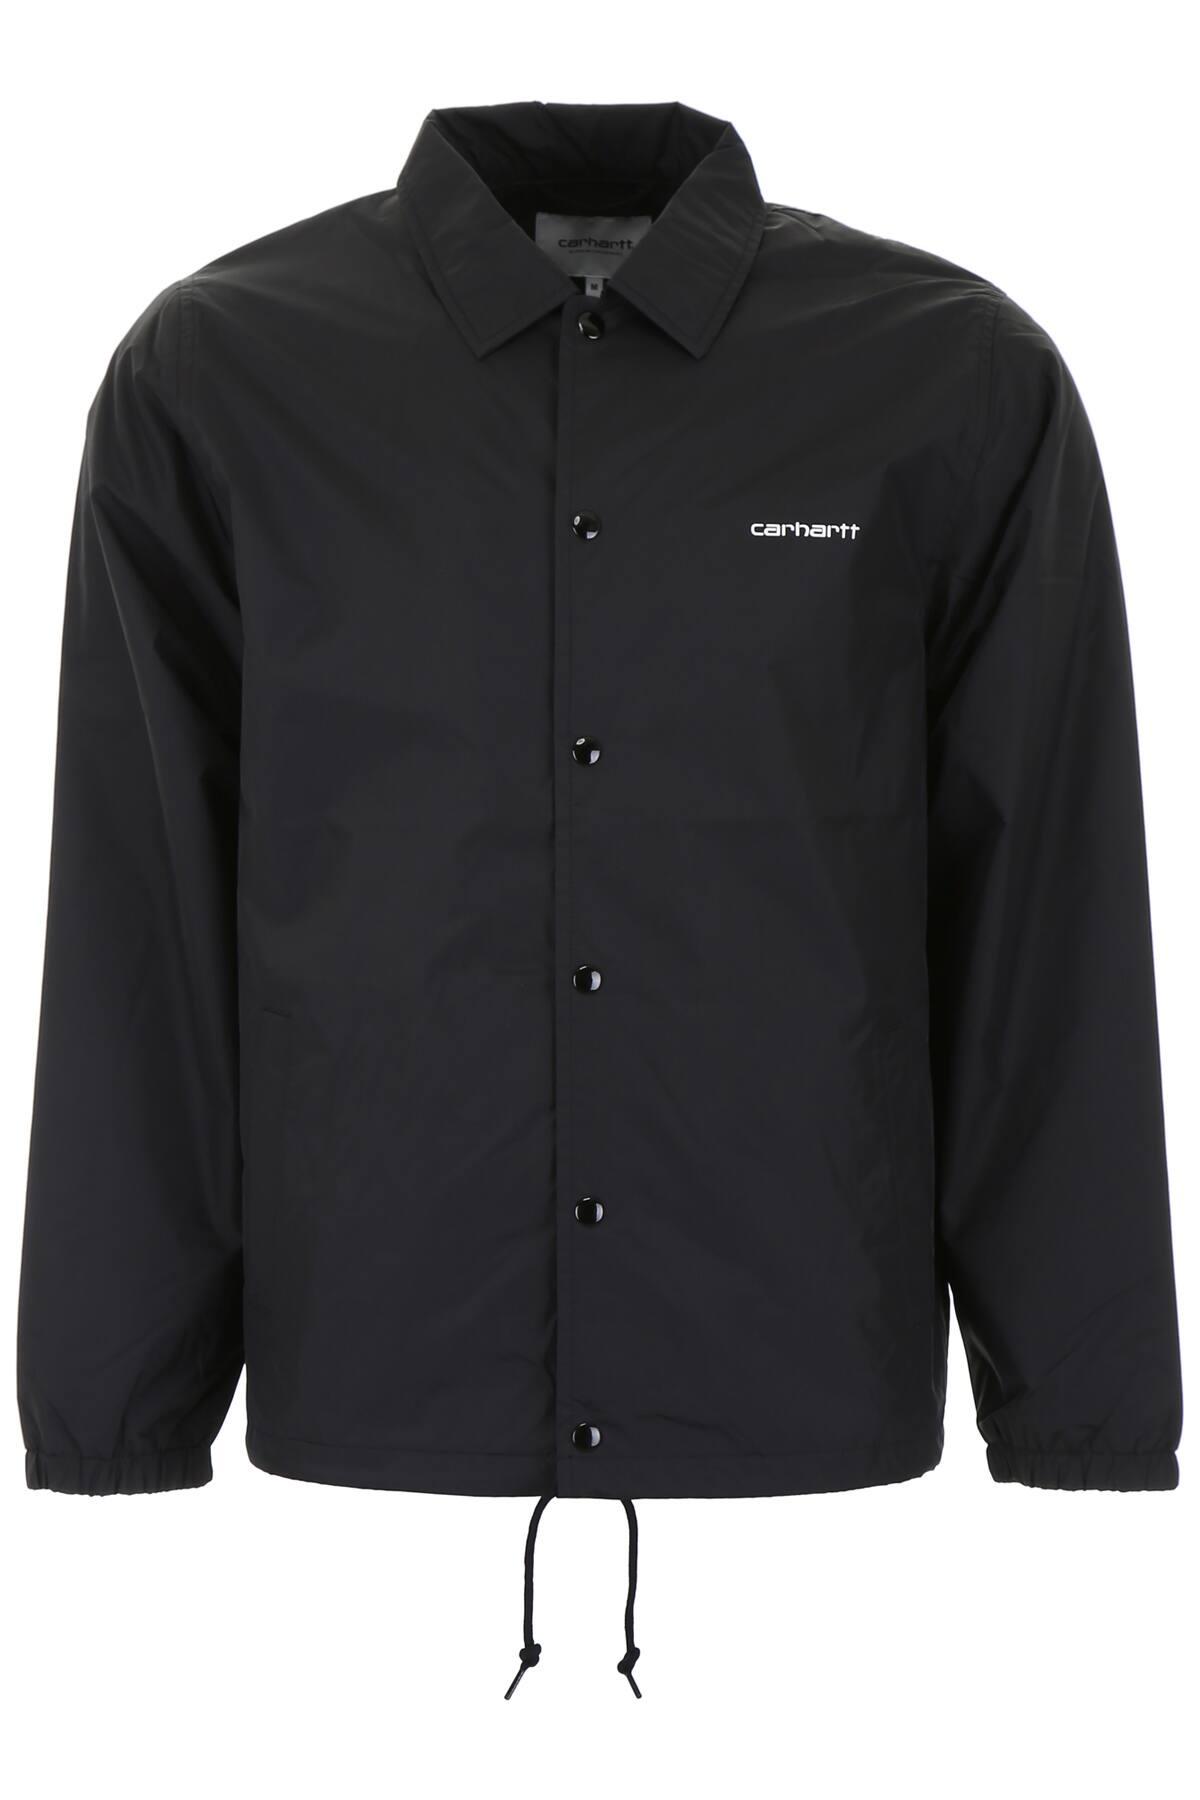 Carhartt Synthetic Logo Jacket in Black for Men - Lyst